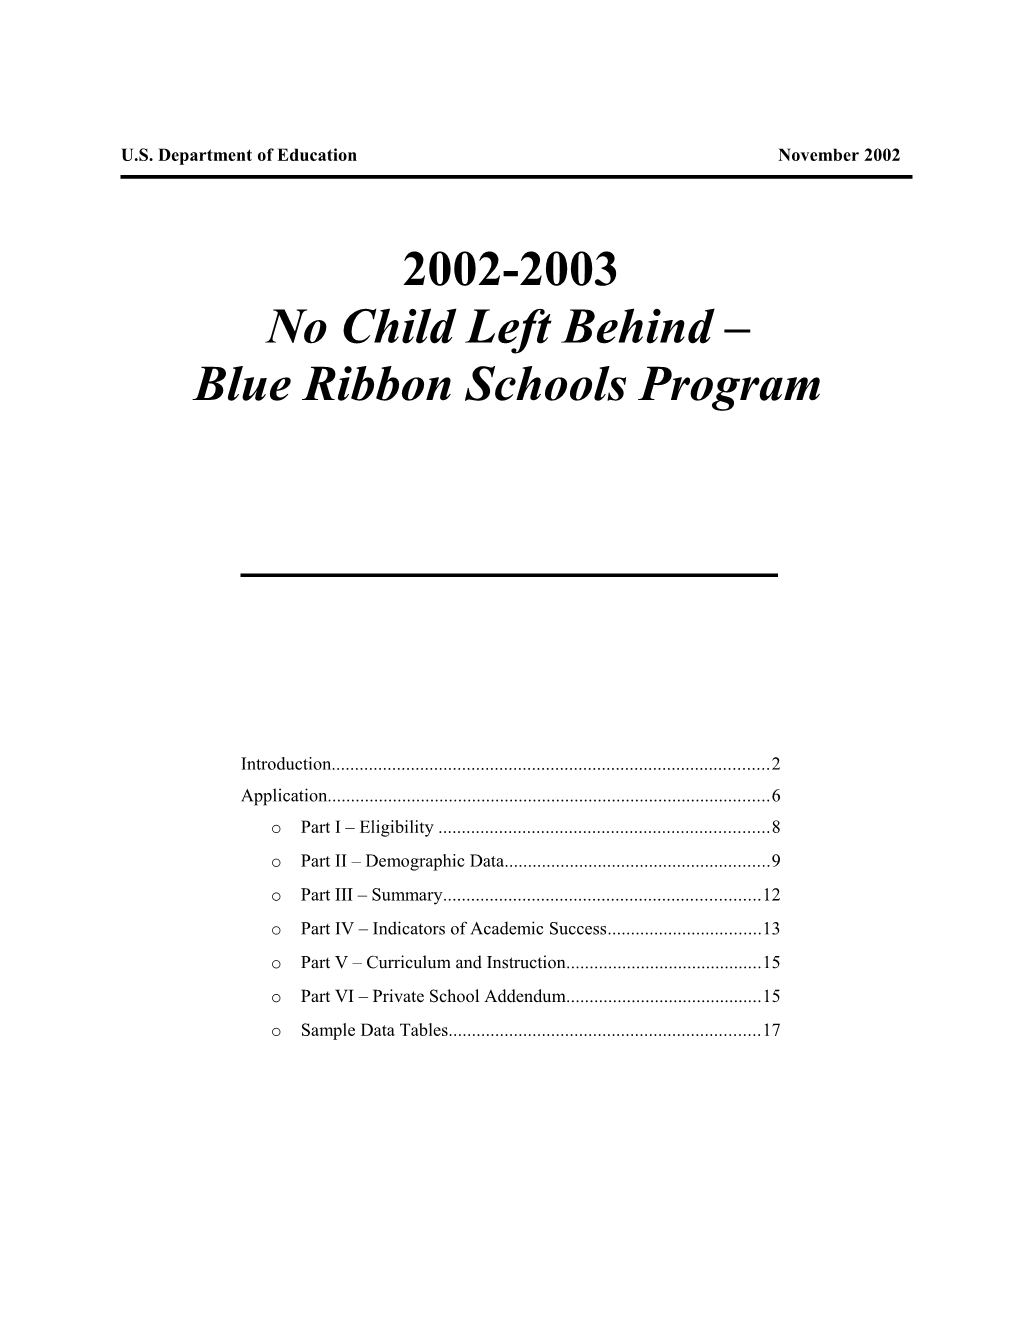 Application 2002-2003, No Child Left Behind-Blue Ribbon Schools Program